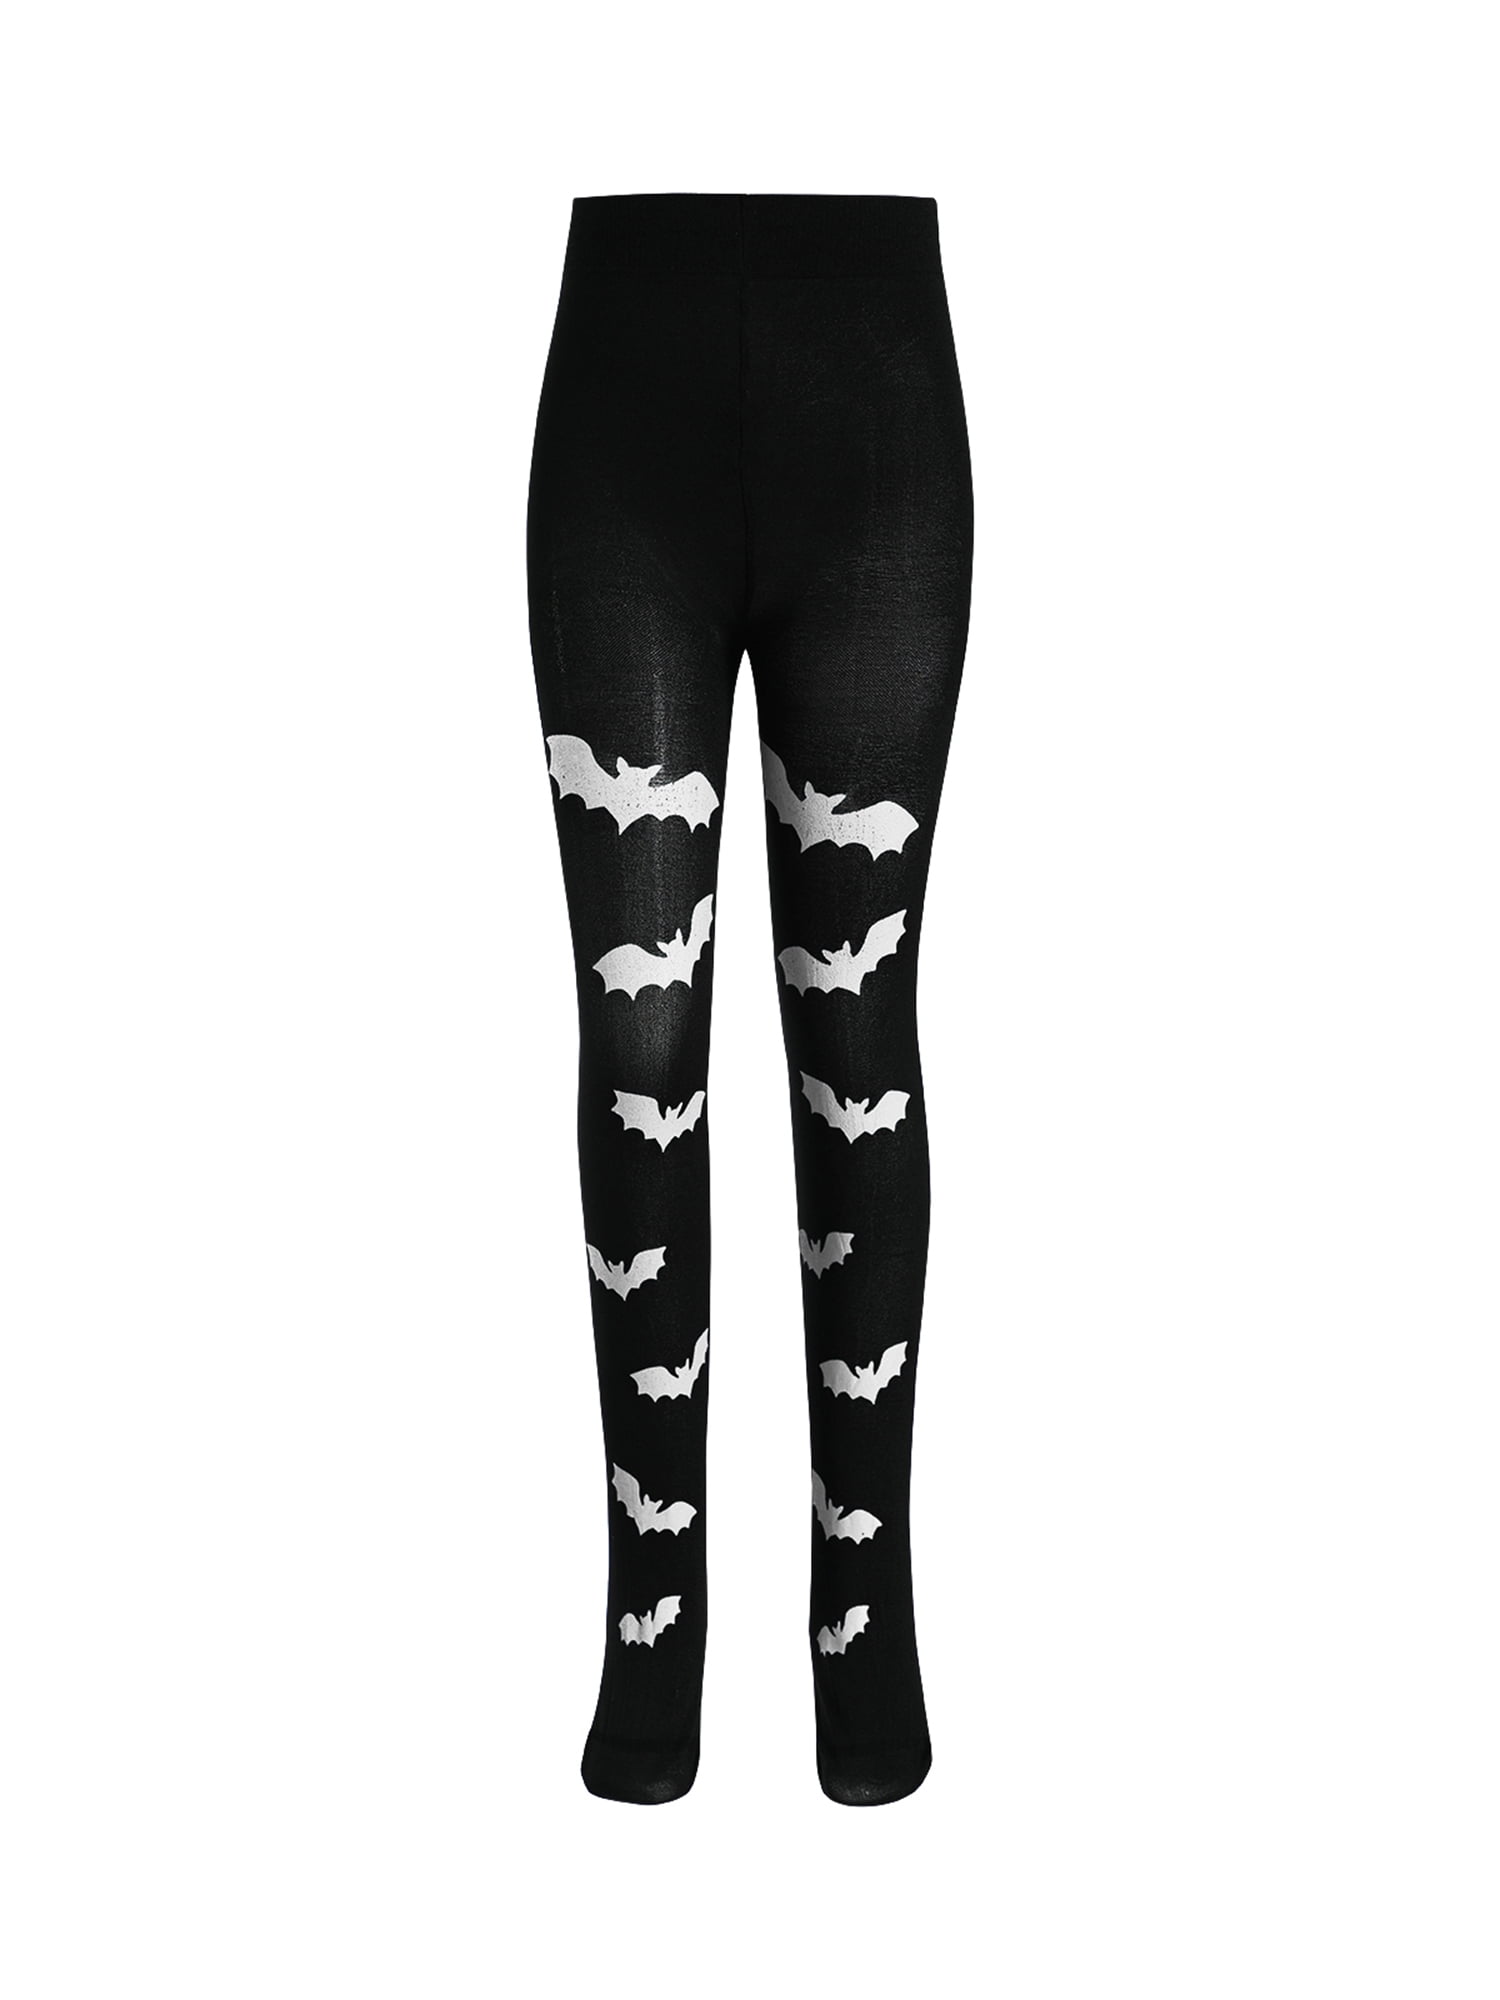 Binpure Halloween Sexy Women Ladies Pantyhose Fishnet Stockings Tight  Elastic Black Skull Printed Fashion Stockings